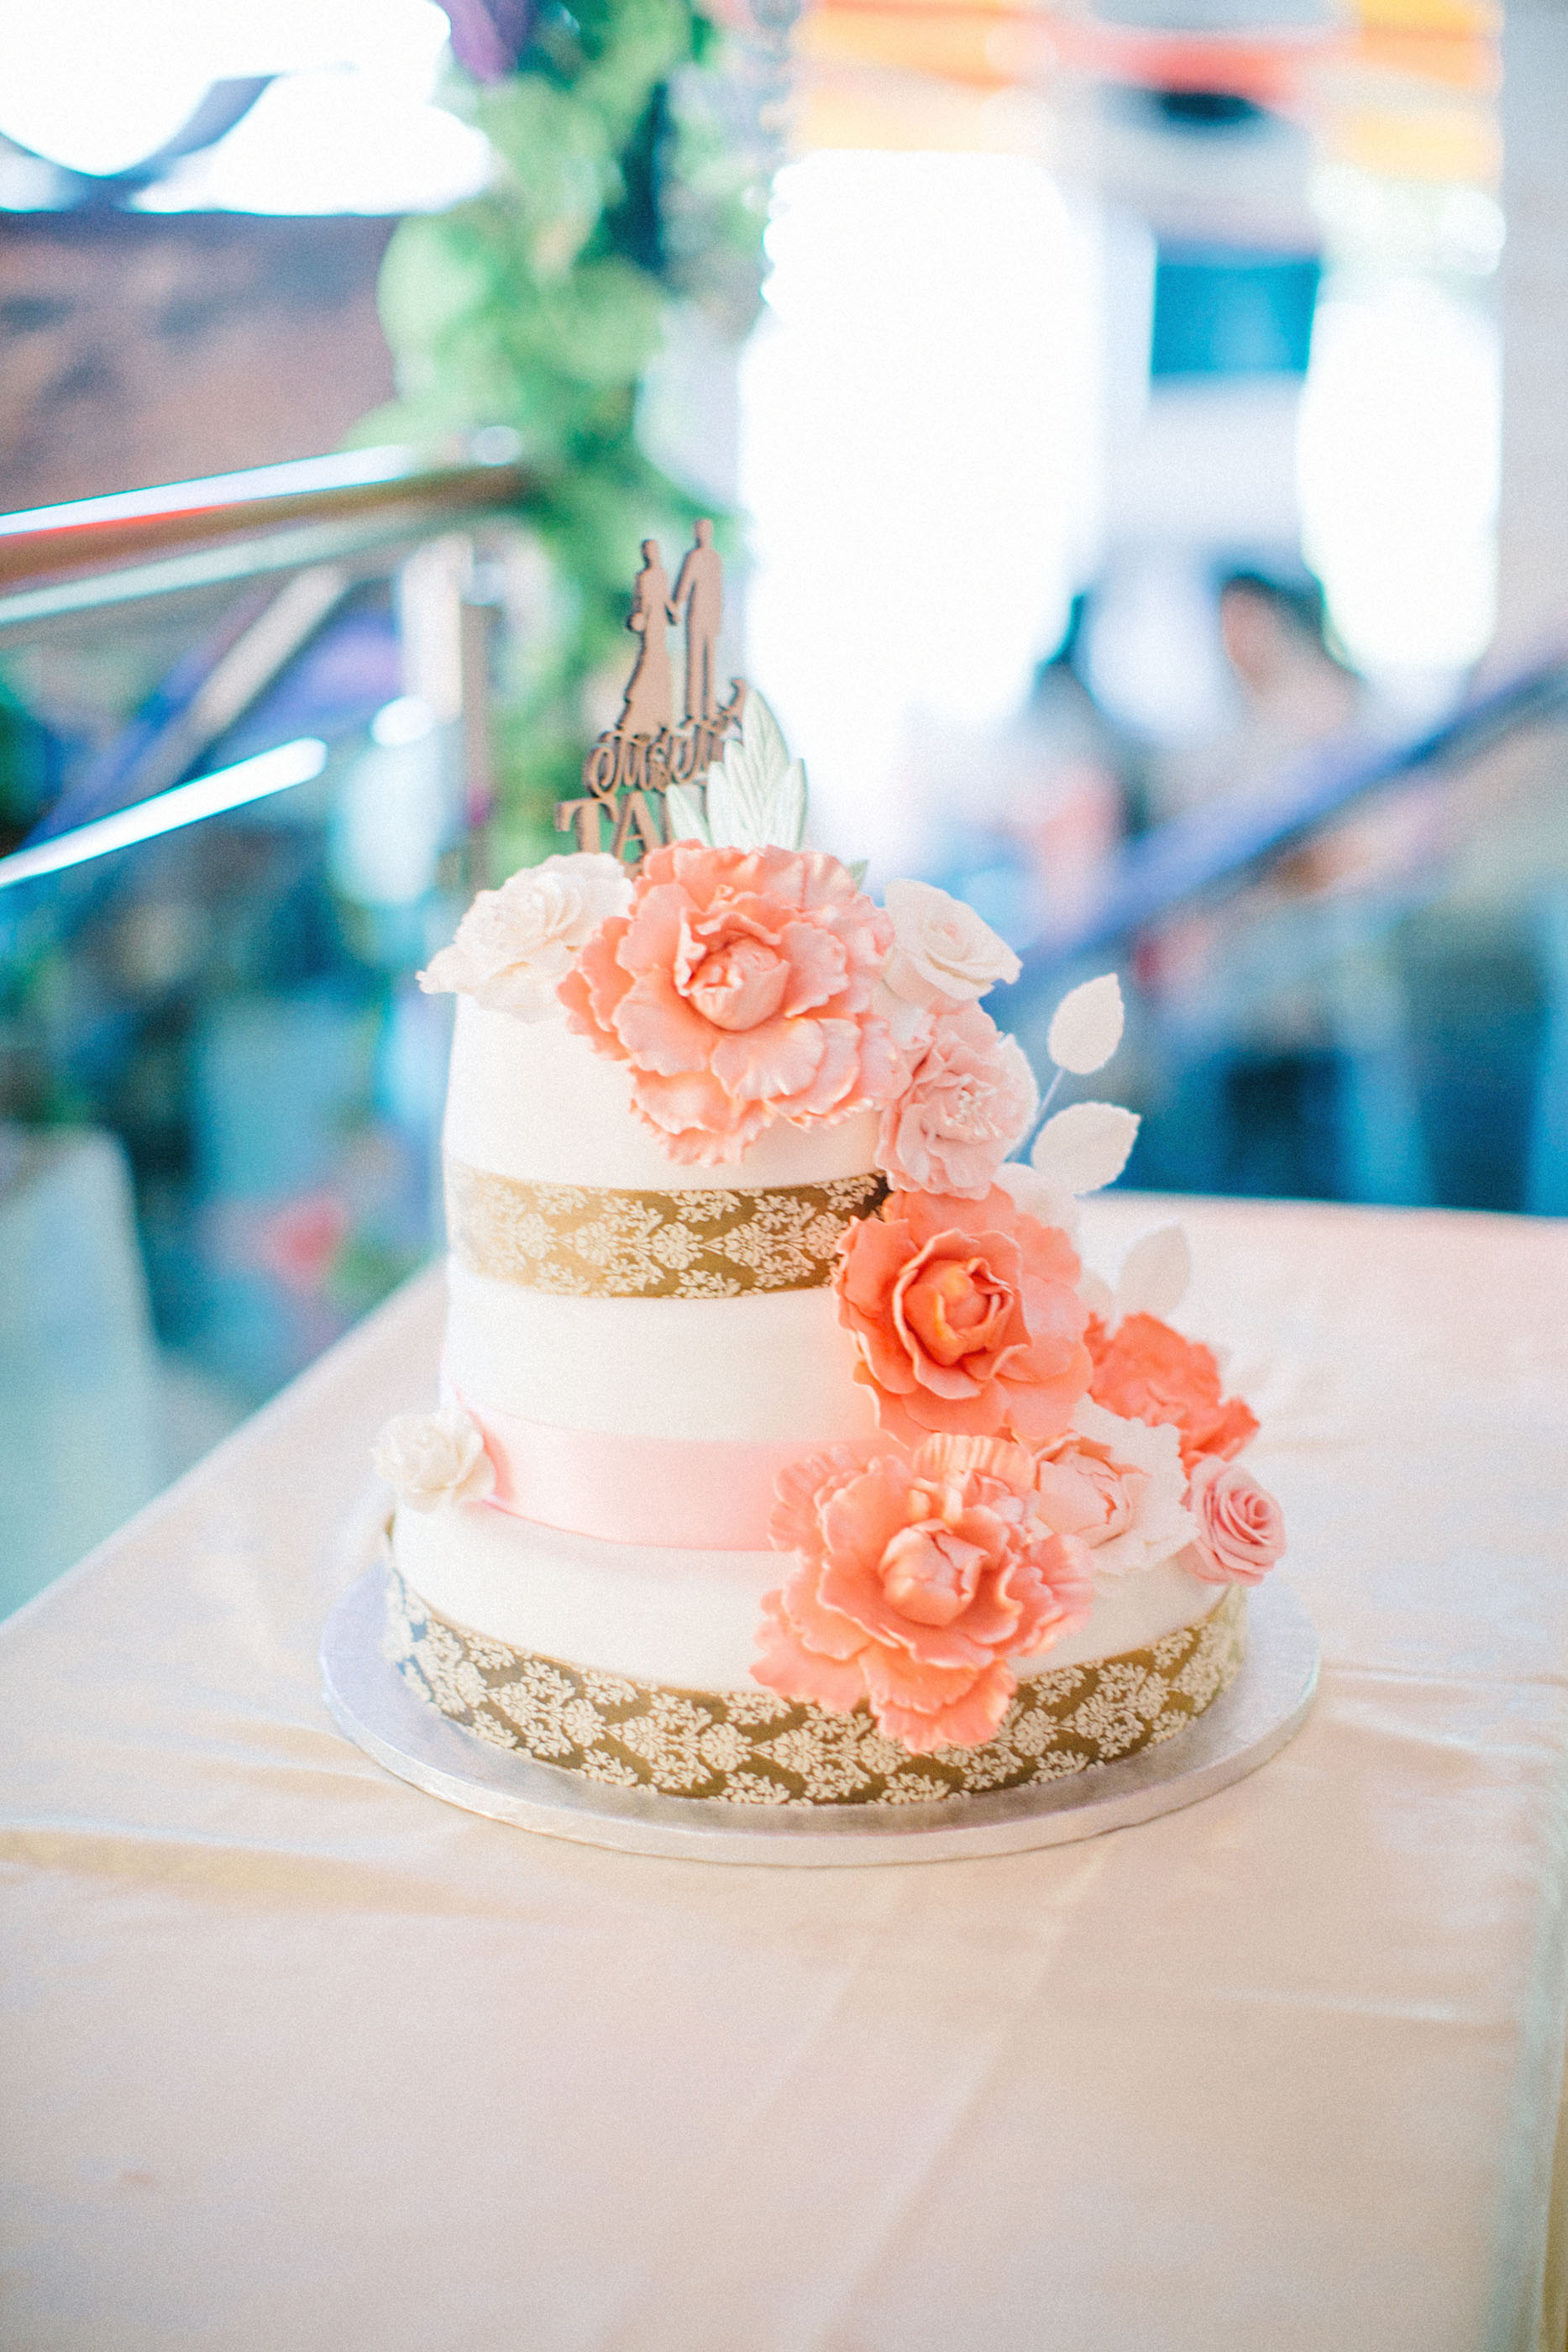 nicholas-lau-photo-photography-fine-art-film-wedding-london-asian-chinese-uk-mulitcultural-ceremony-reception-coral-pink-cake